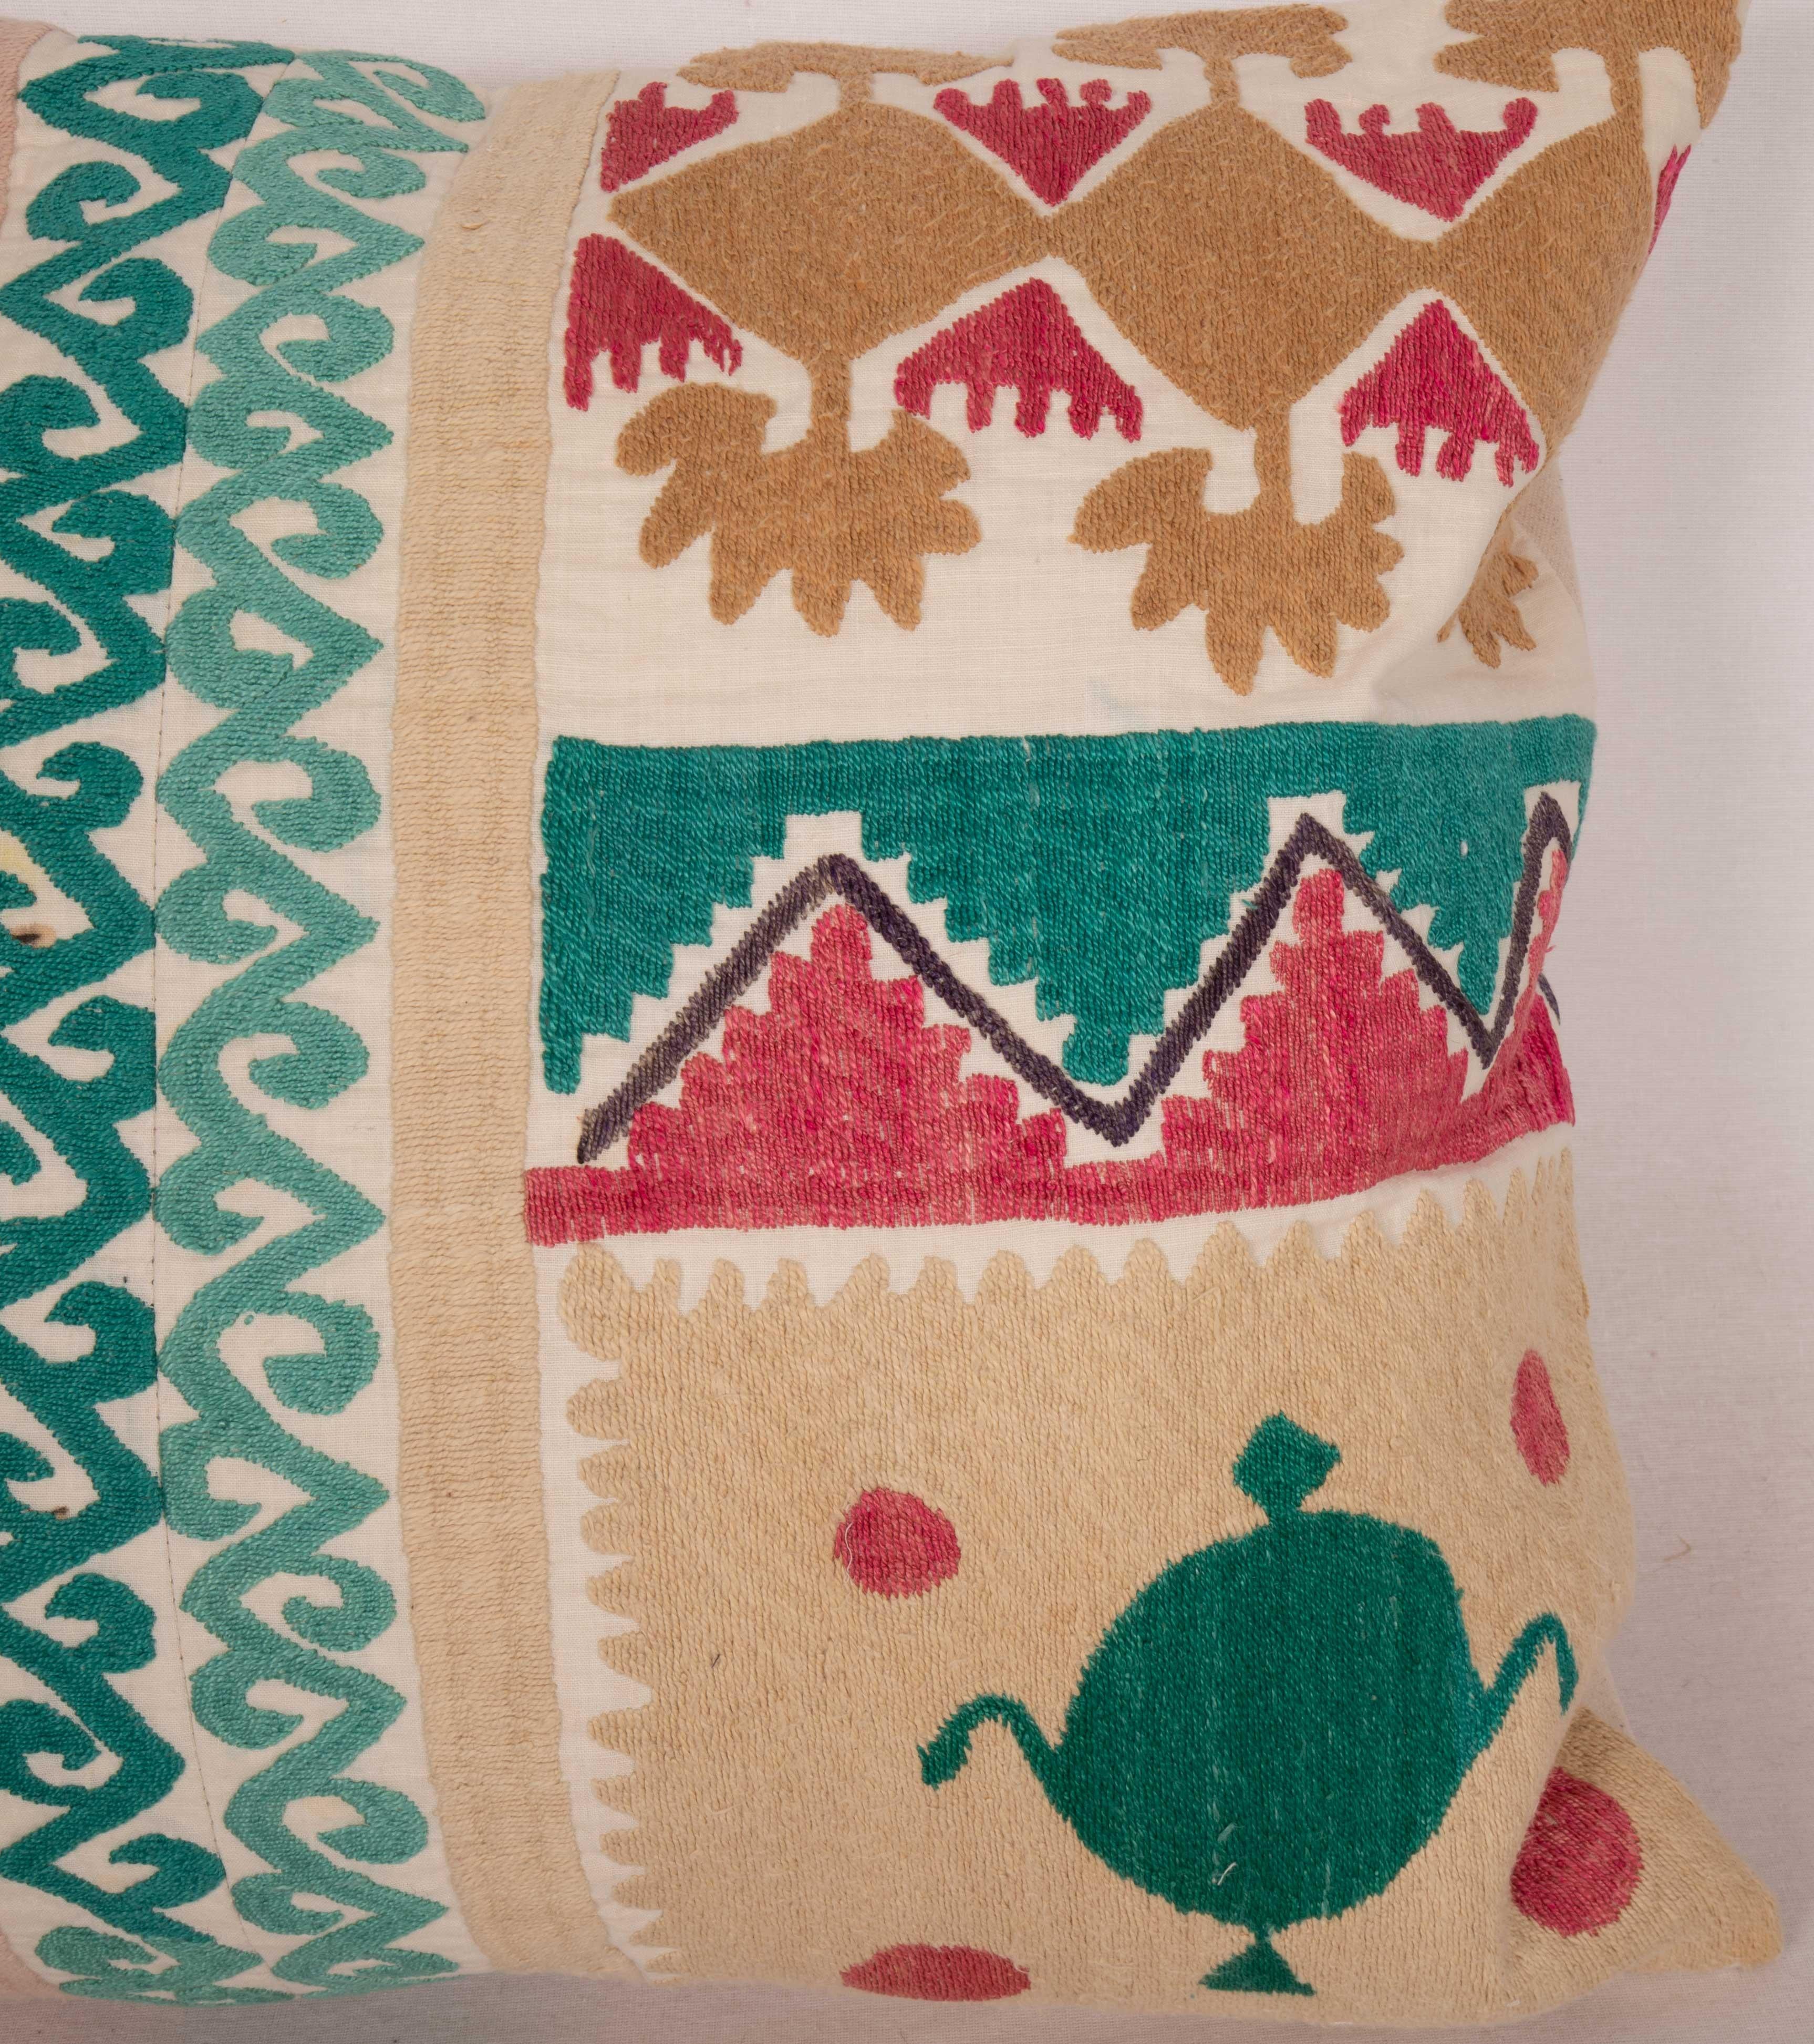 Embroidered Mid-20th C. Suzani Pillowcase Made from a Samarkand Suzani